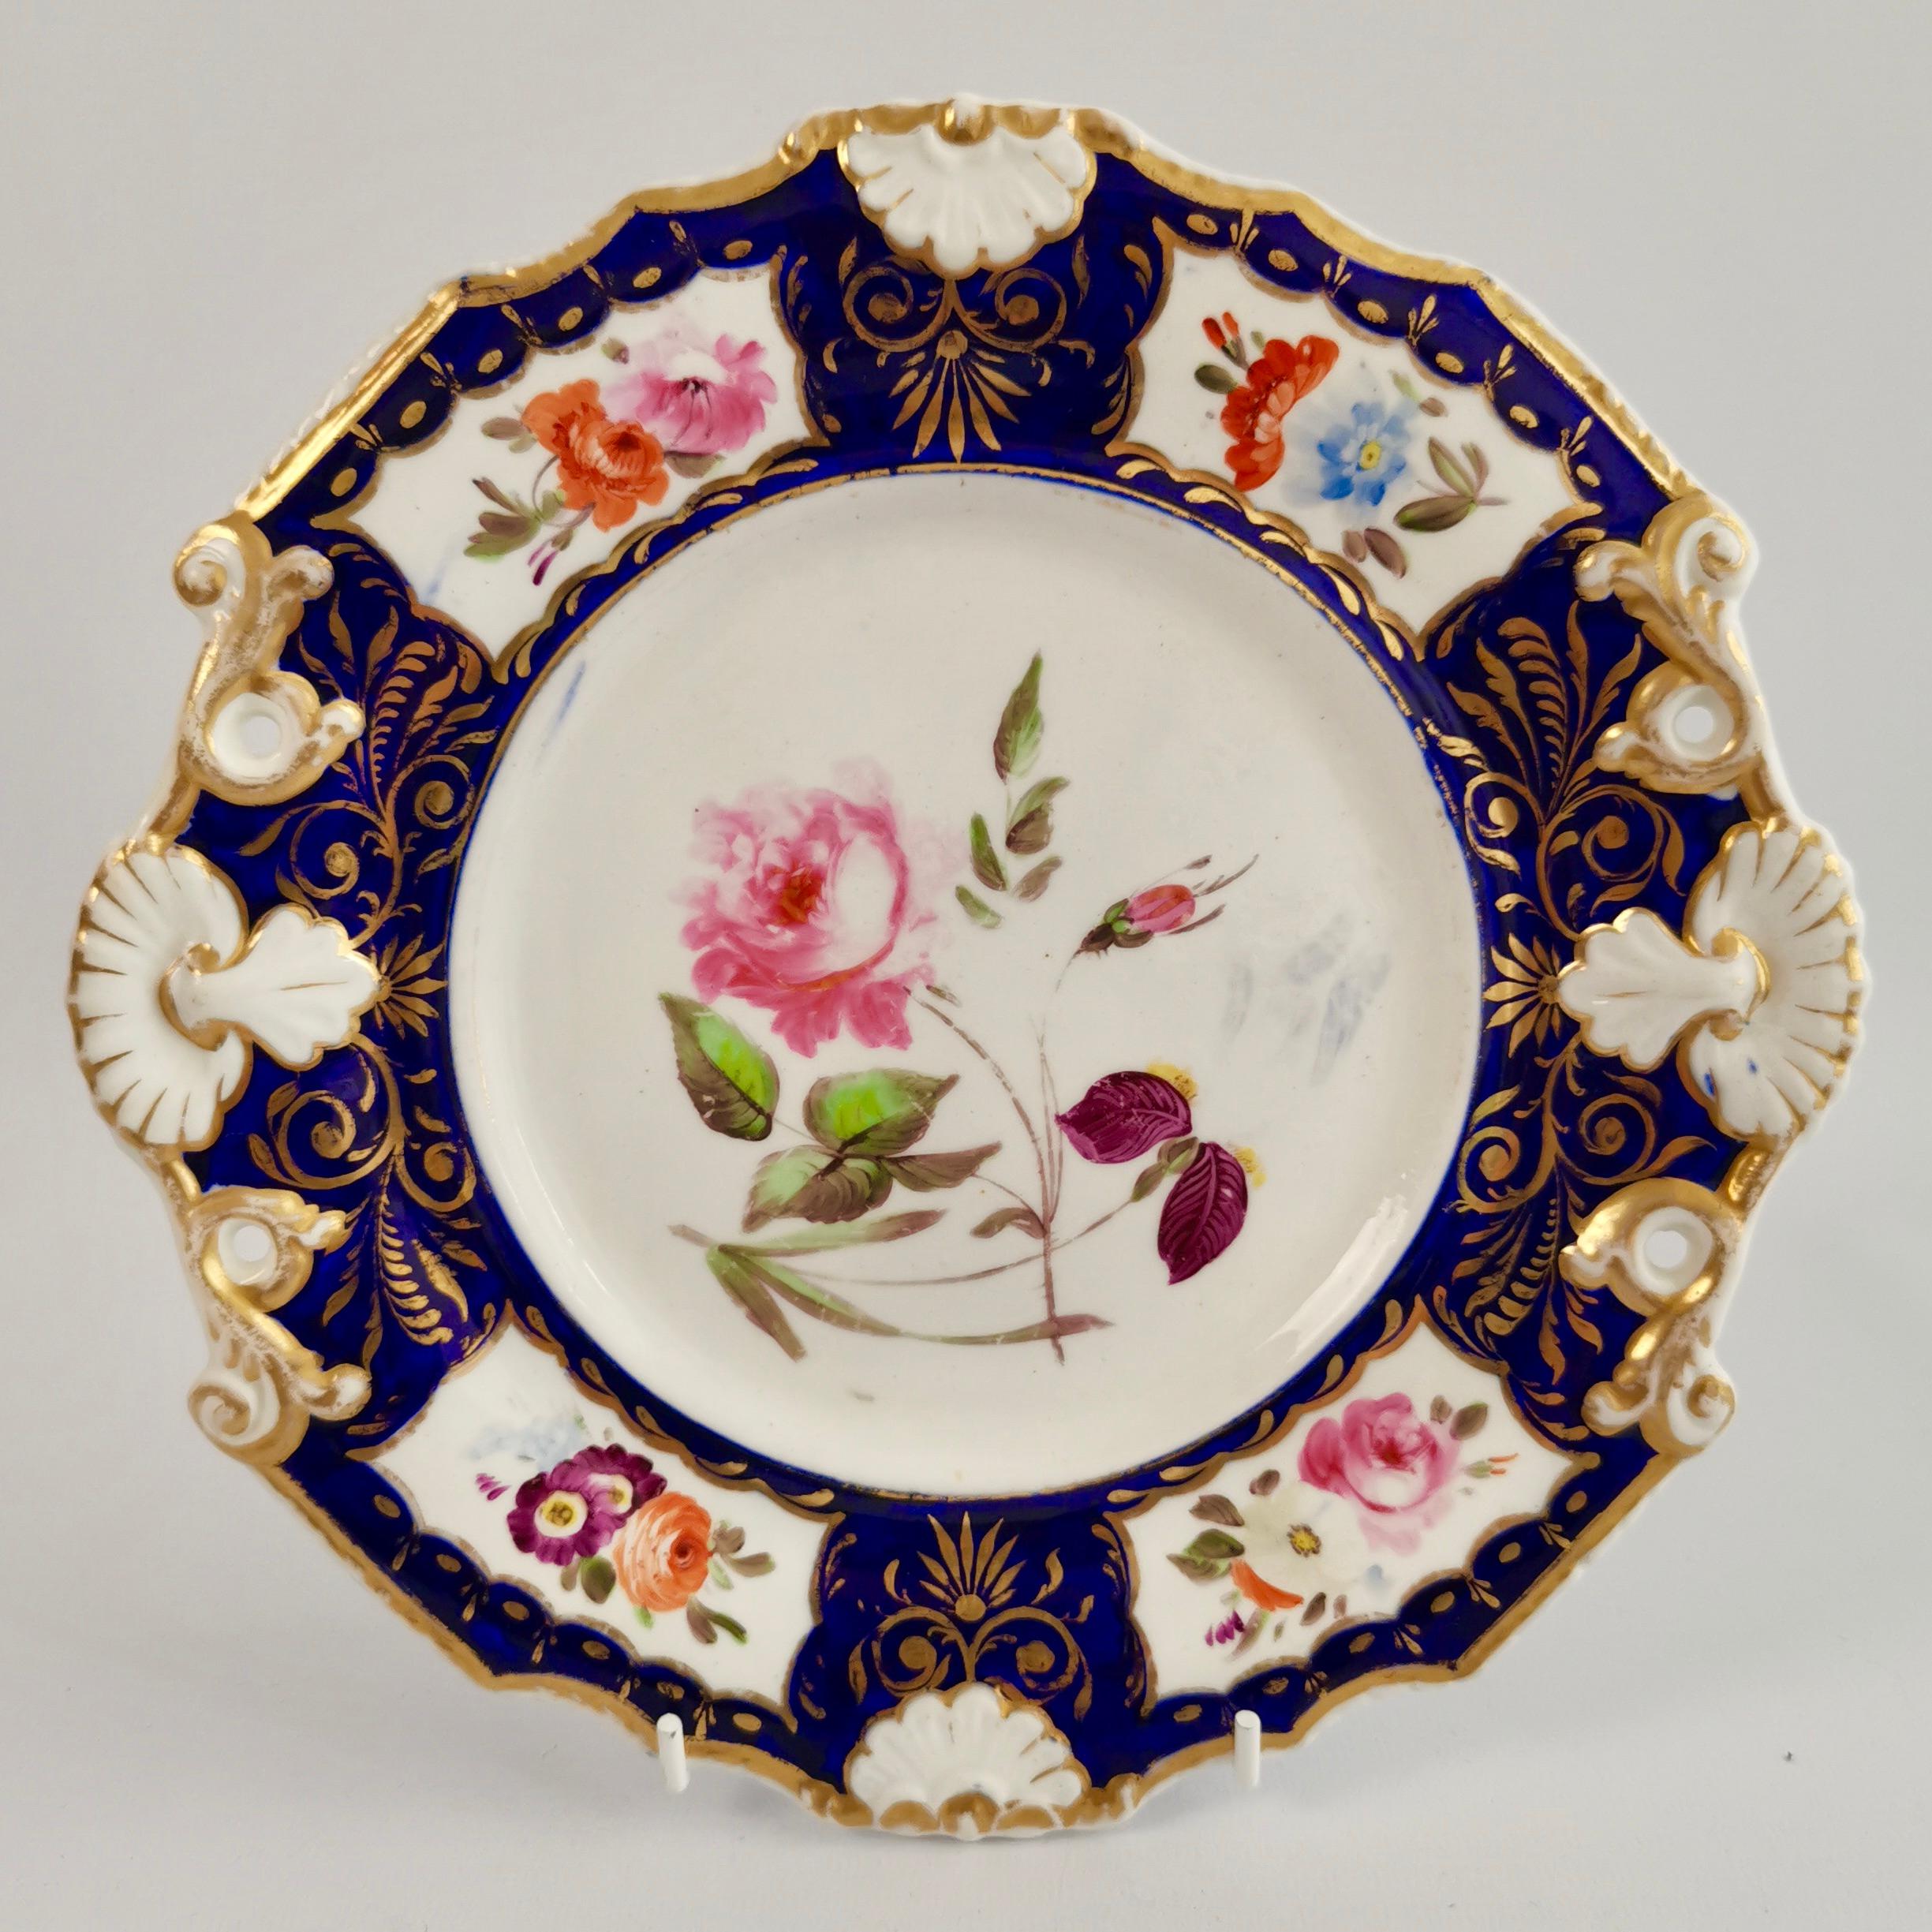 New Hall Porcelain Part Dessert Service, Cobalt Blue, Flowers, Regency 1824-1830 4